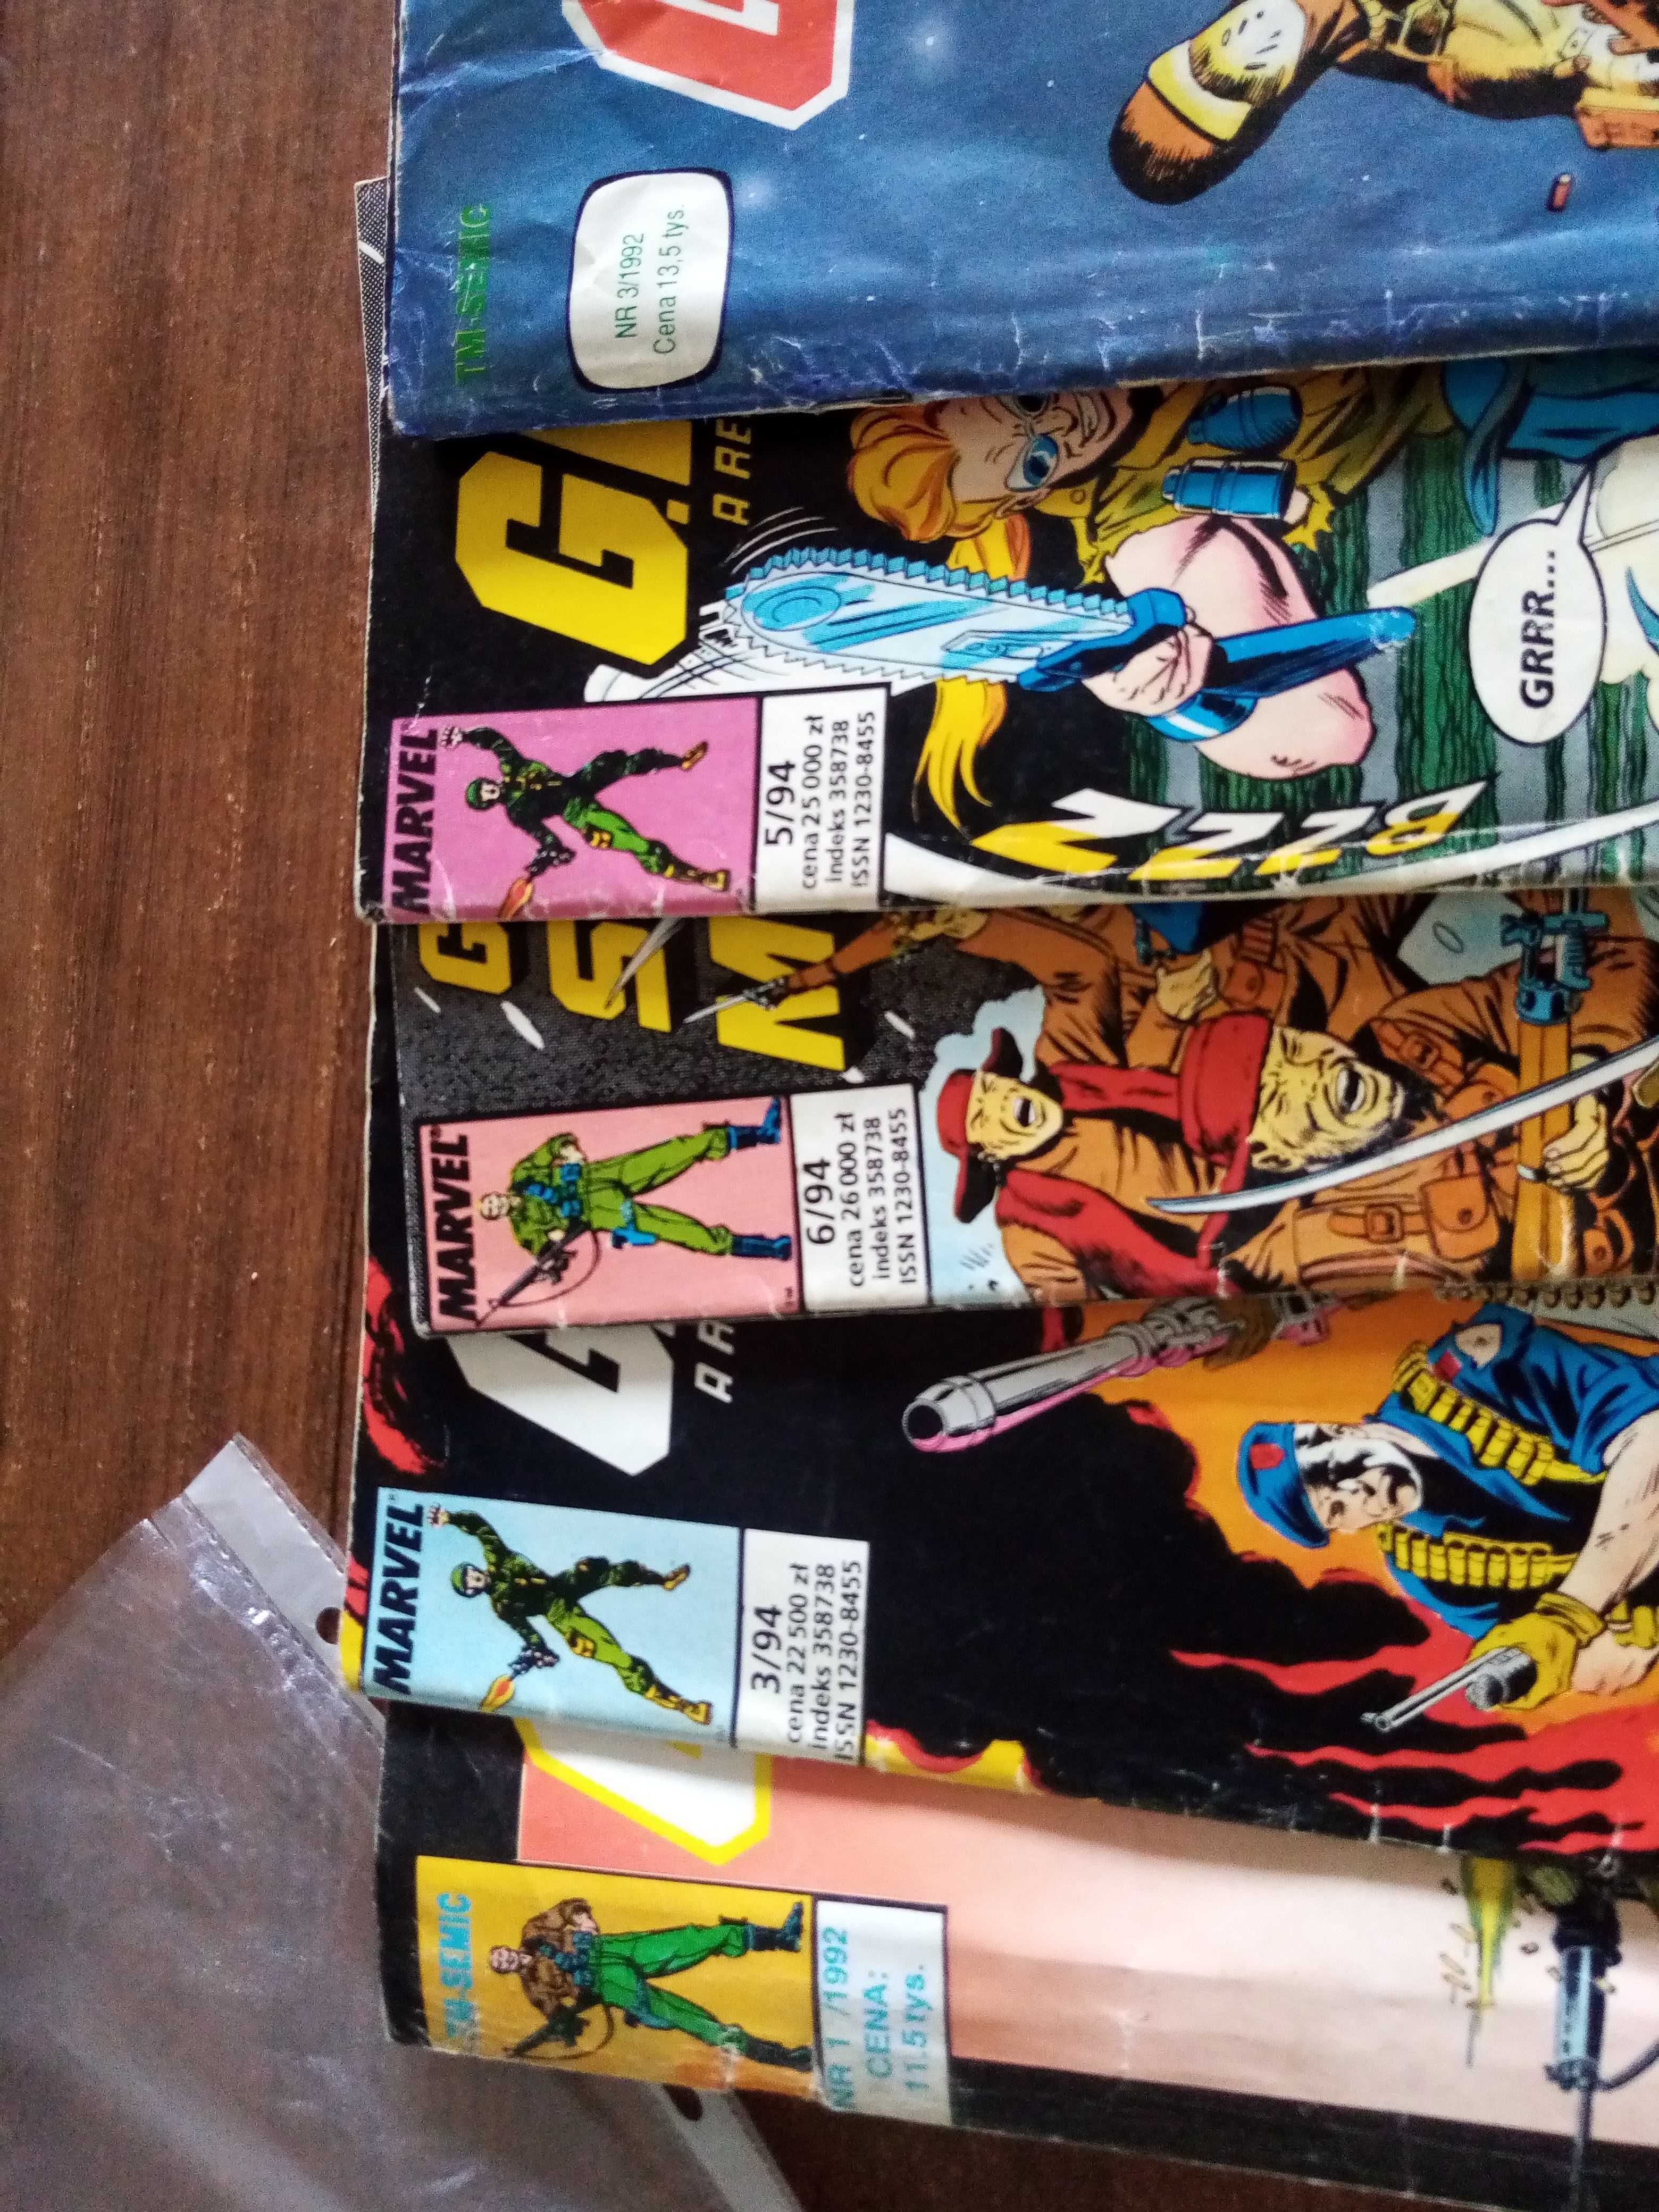 Komiksy g. I. Joe tm semic zestaw 5 szt stany dobre